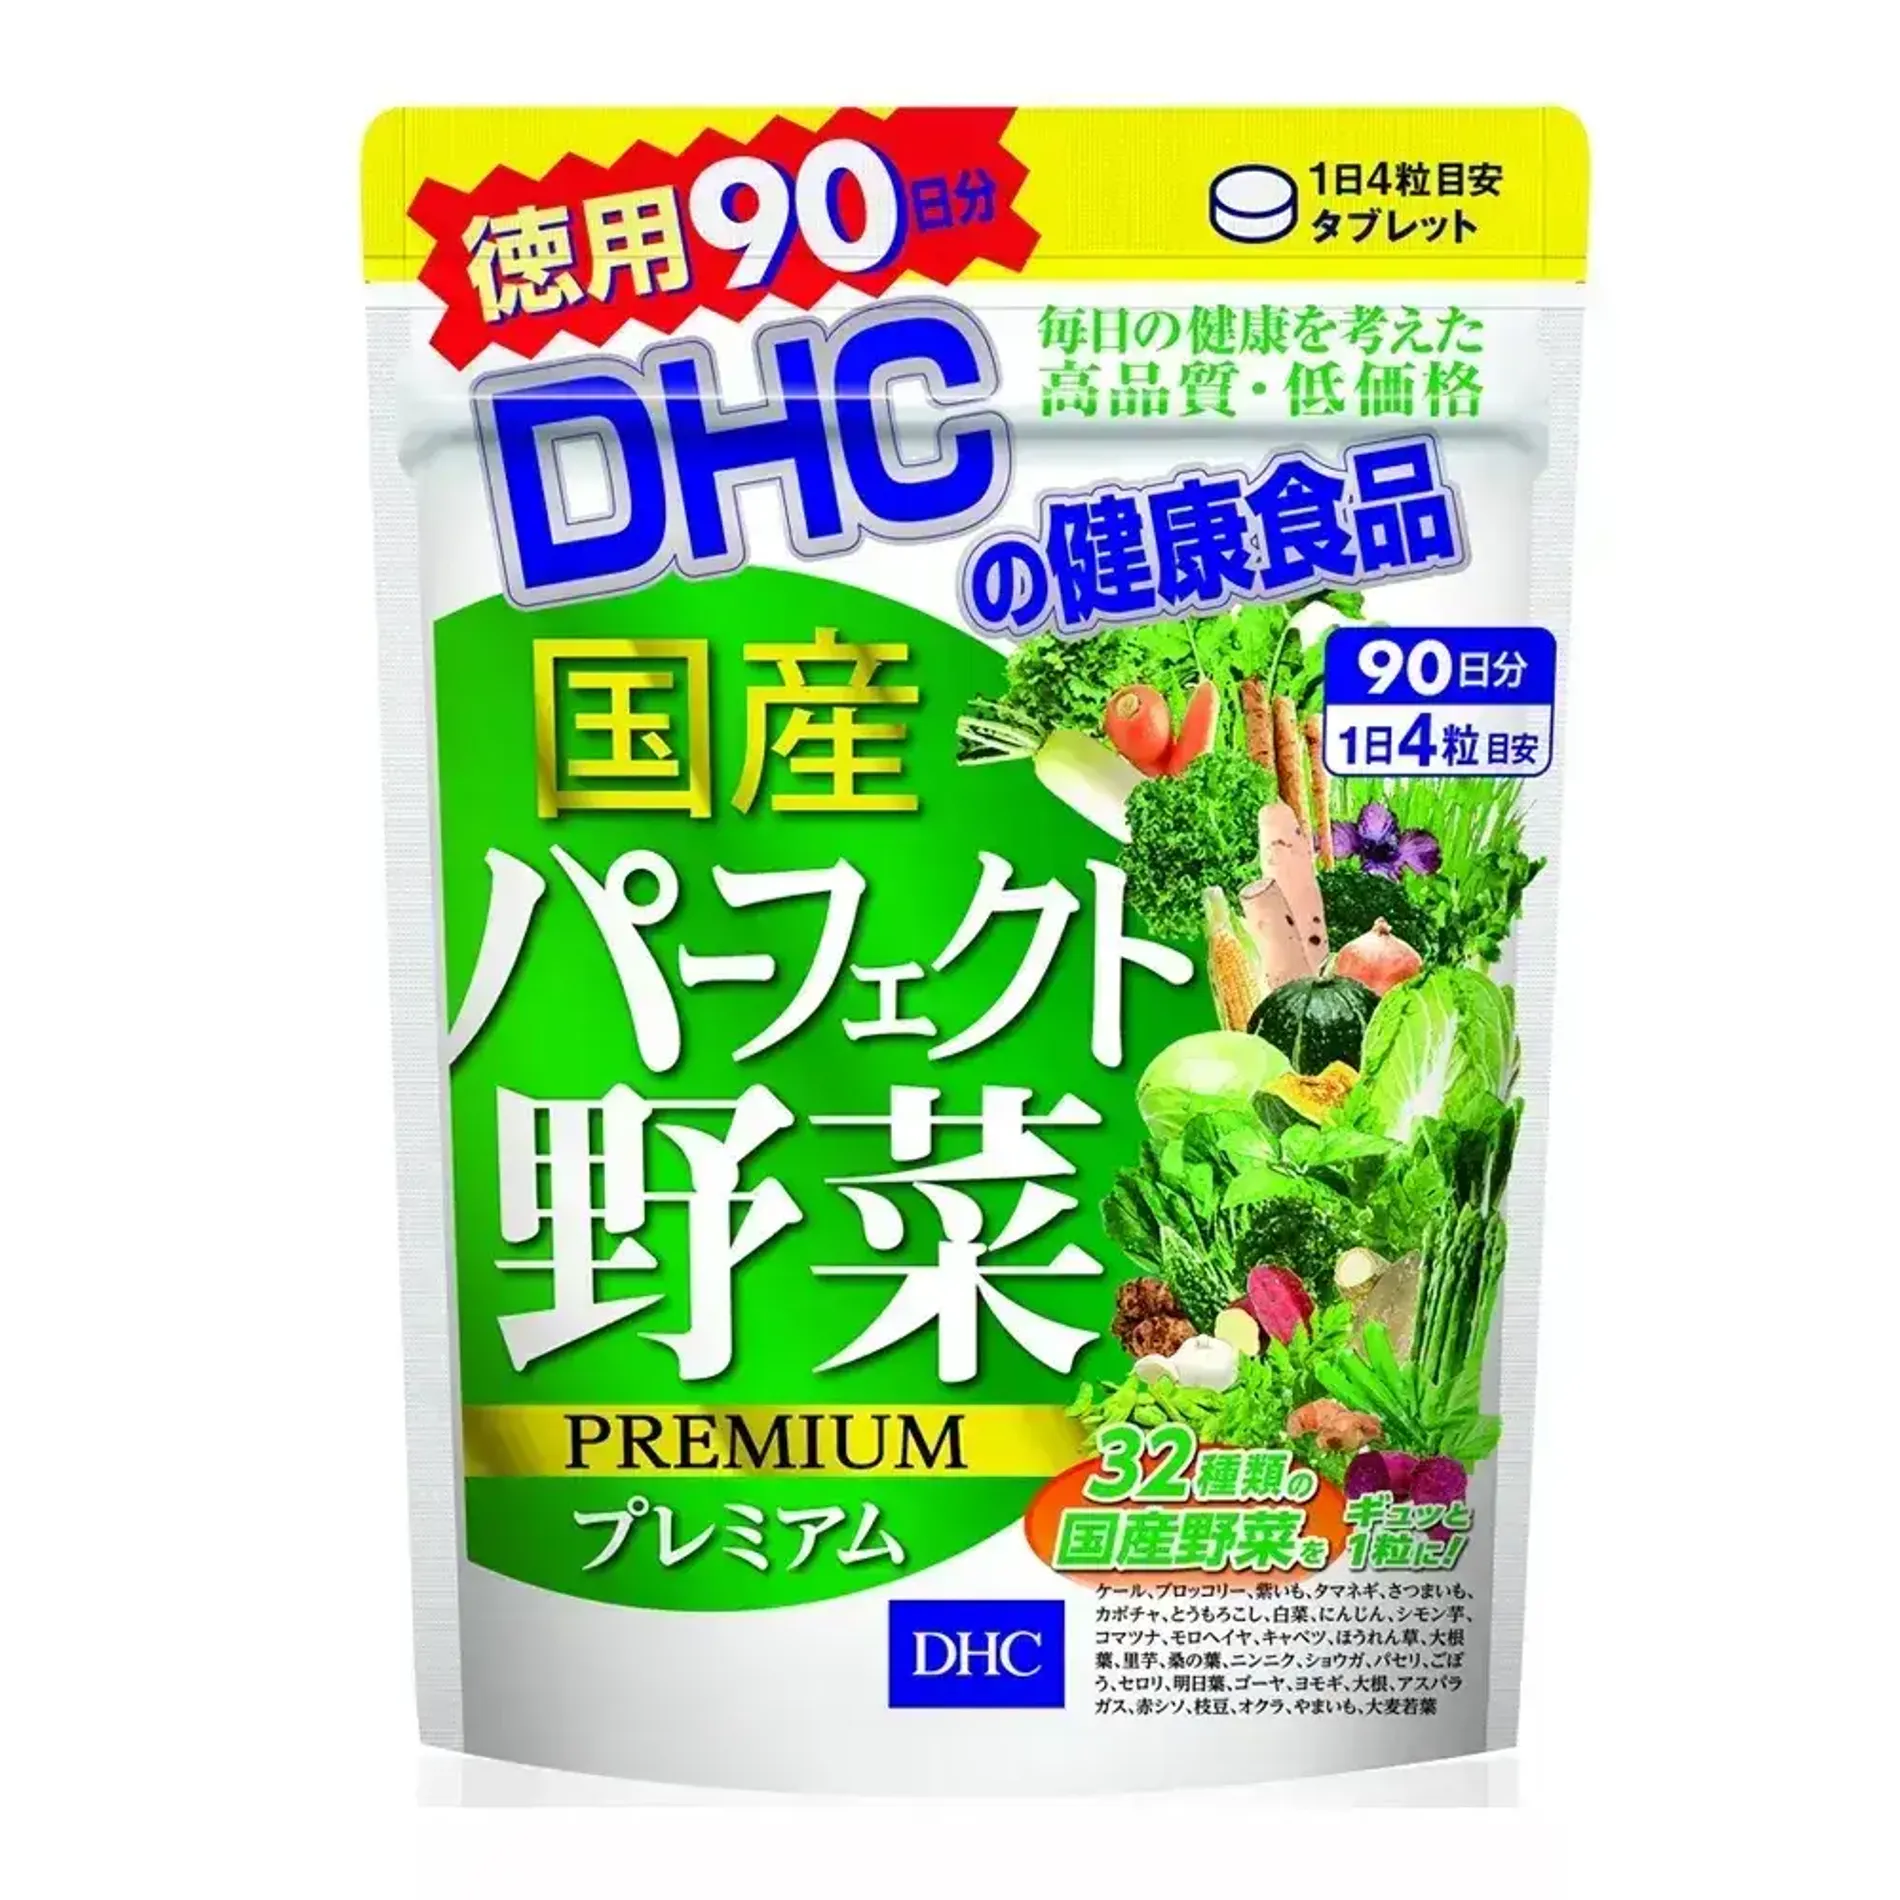 thuc-pham-bao-ve-suc-khoe-dhc-perfect-vegetable-premium-japanese-harvest-2